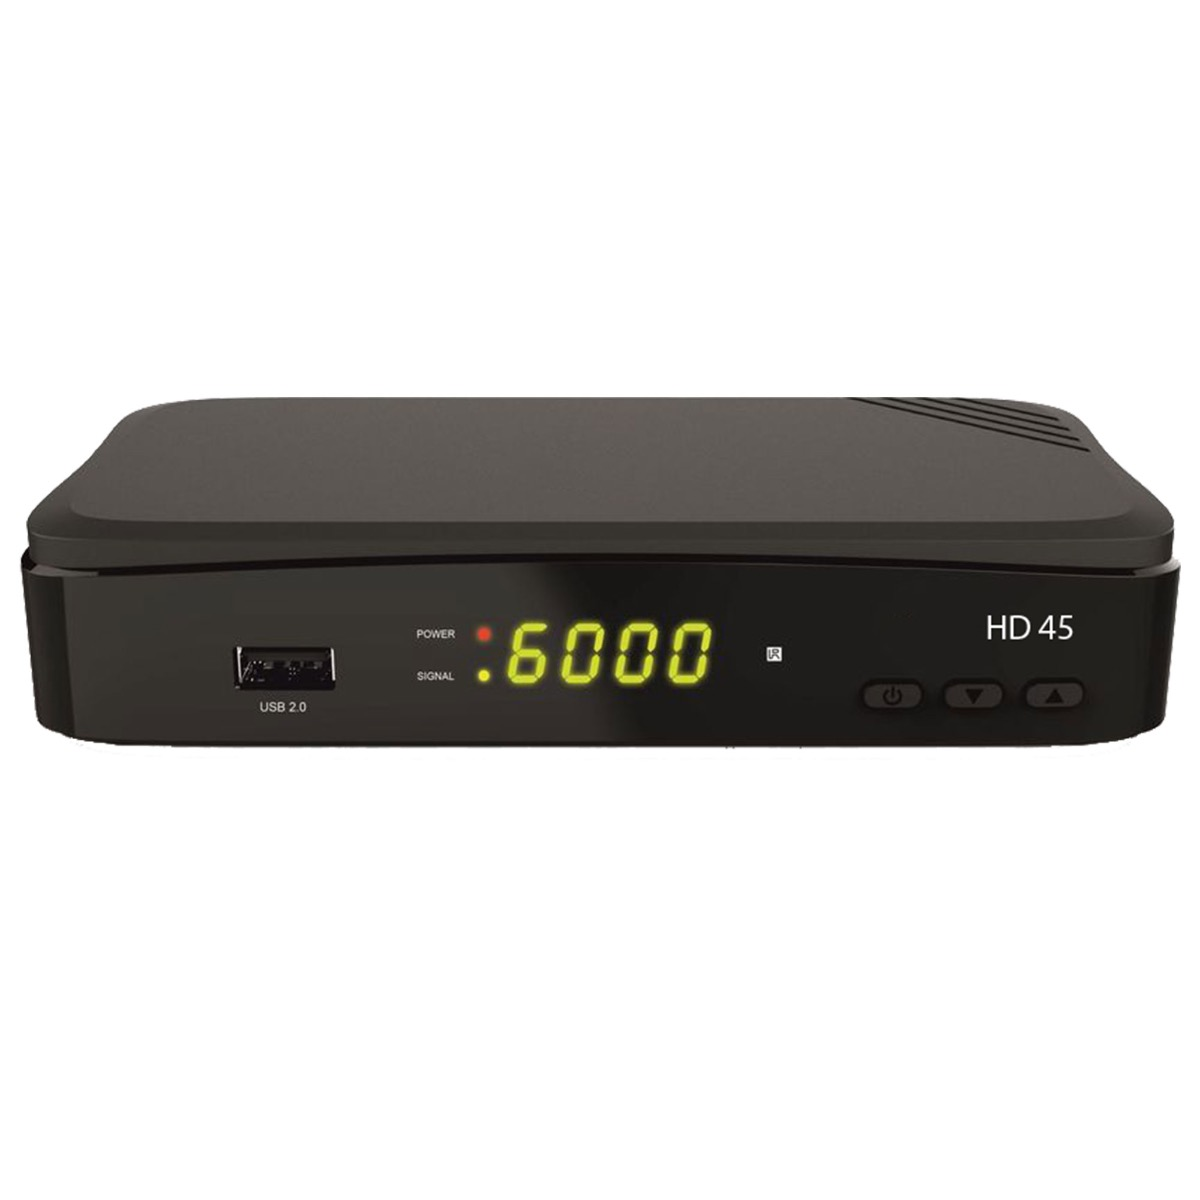 HD45 DVB-S, Satellitenreceiver (HDTV, DVB-S2, COMAG schwarz)